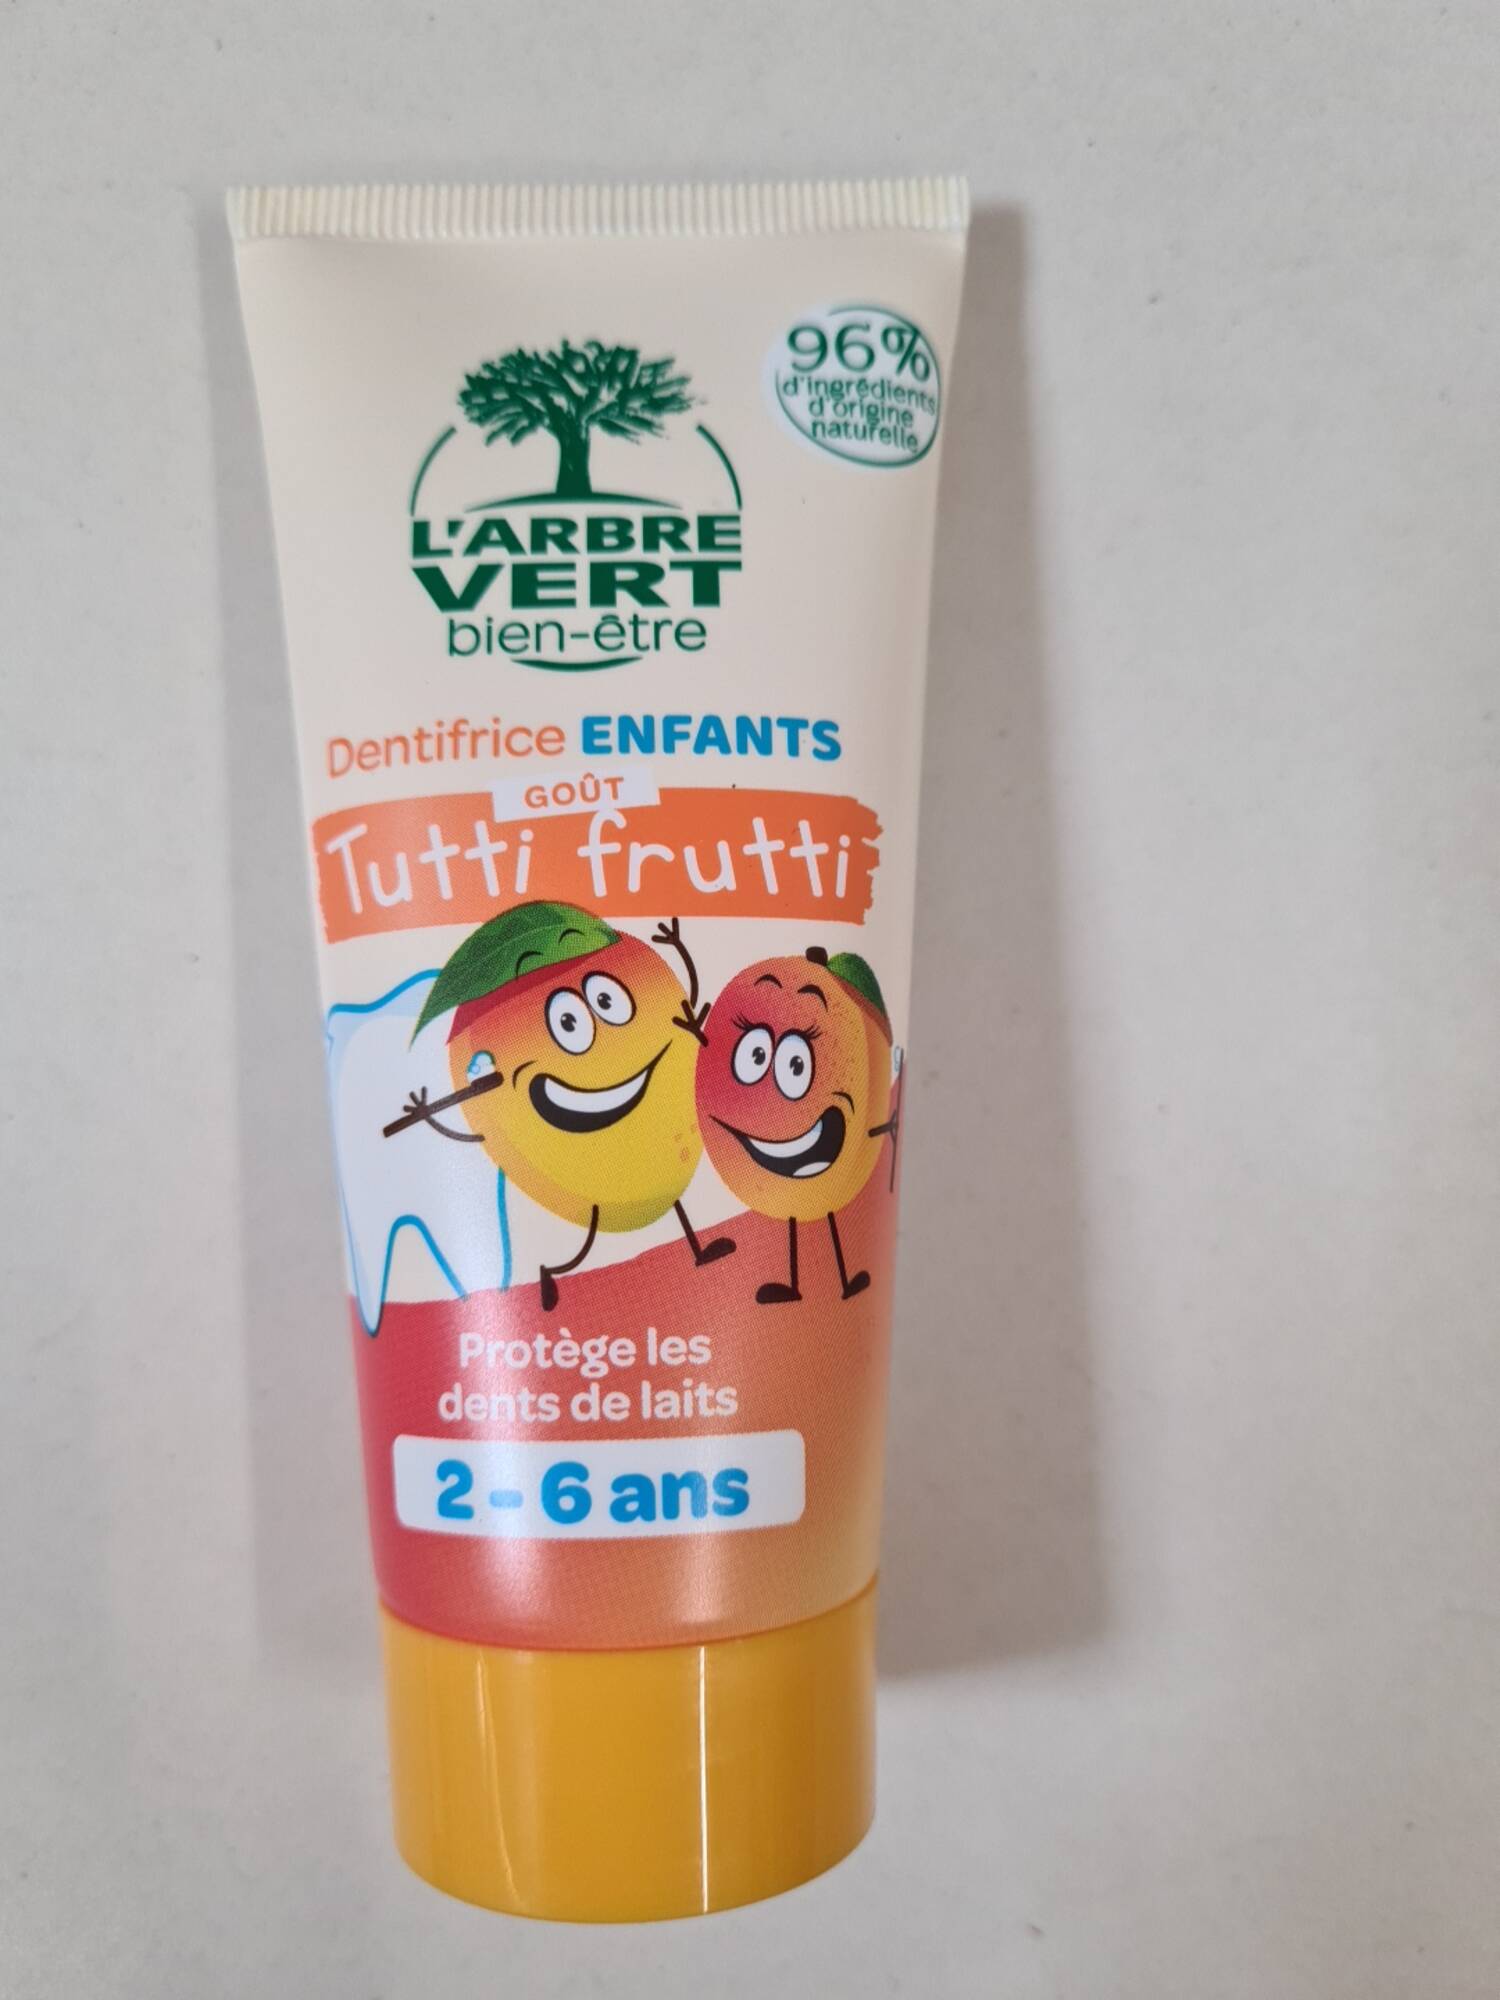 L'ARBRE VERT - Tutti frutti 2-6 ans - Dentifrice enfants